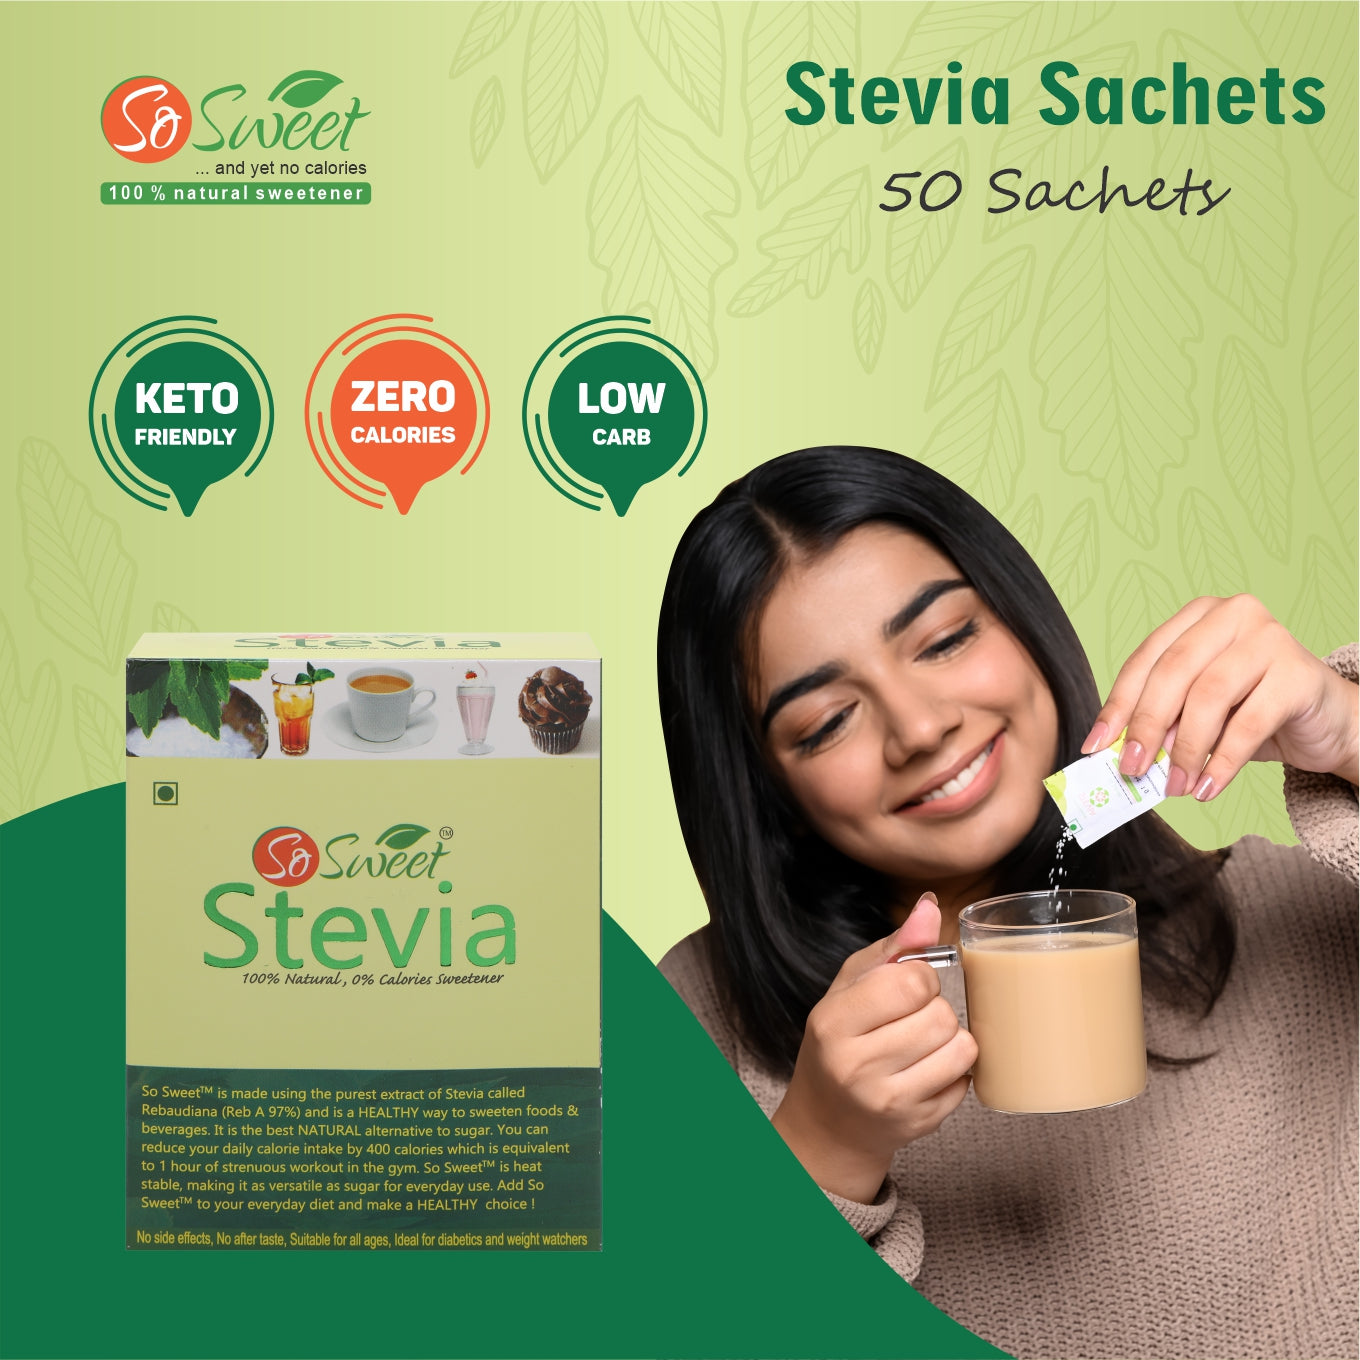 So Sweet Stevia Sachets 50 Zero Calorie 100% Natural Sweetener - Sugar Free